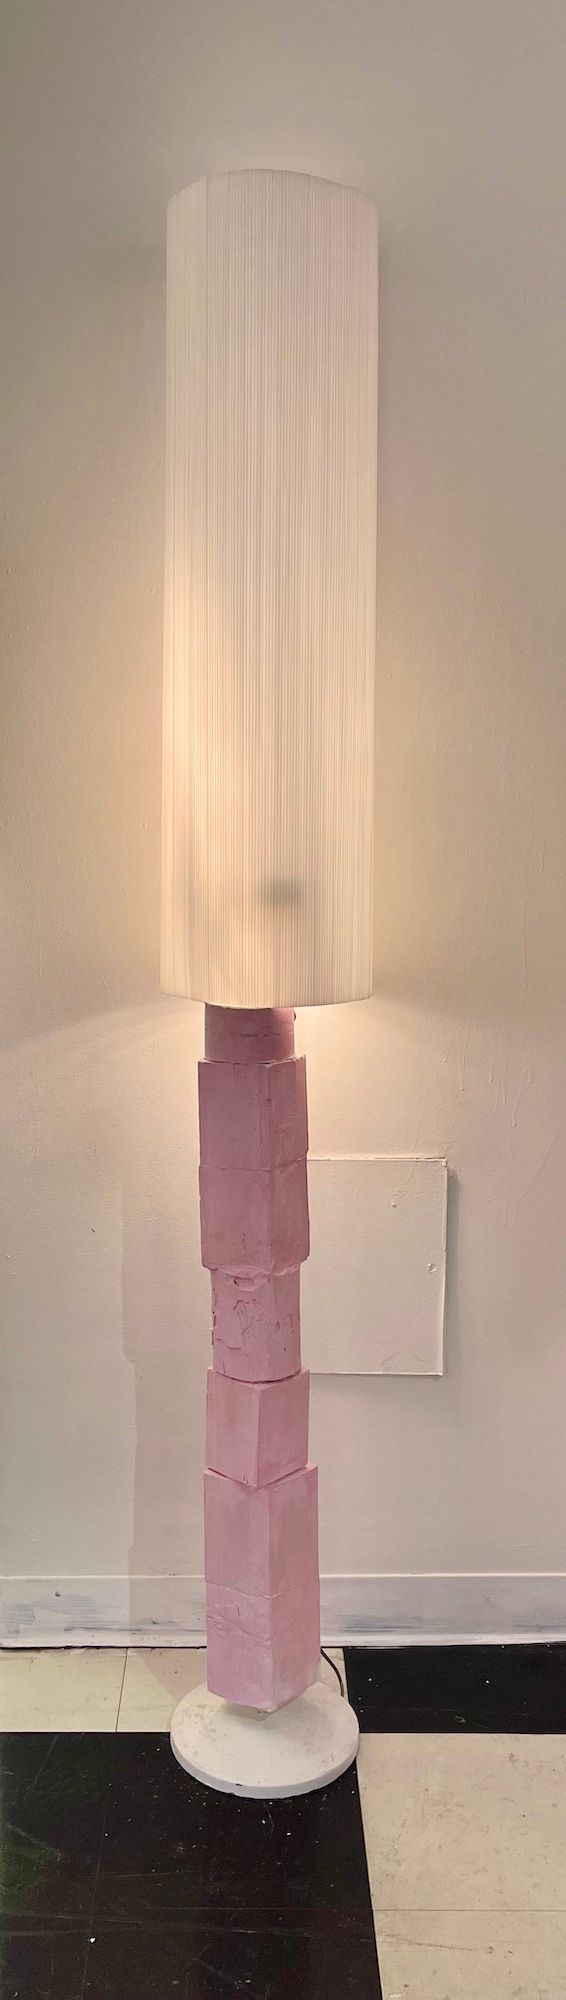 greenworldx2 (Eva Mantell and Joel Beck), "daylight lamp, pink"